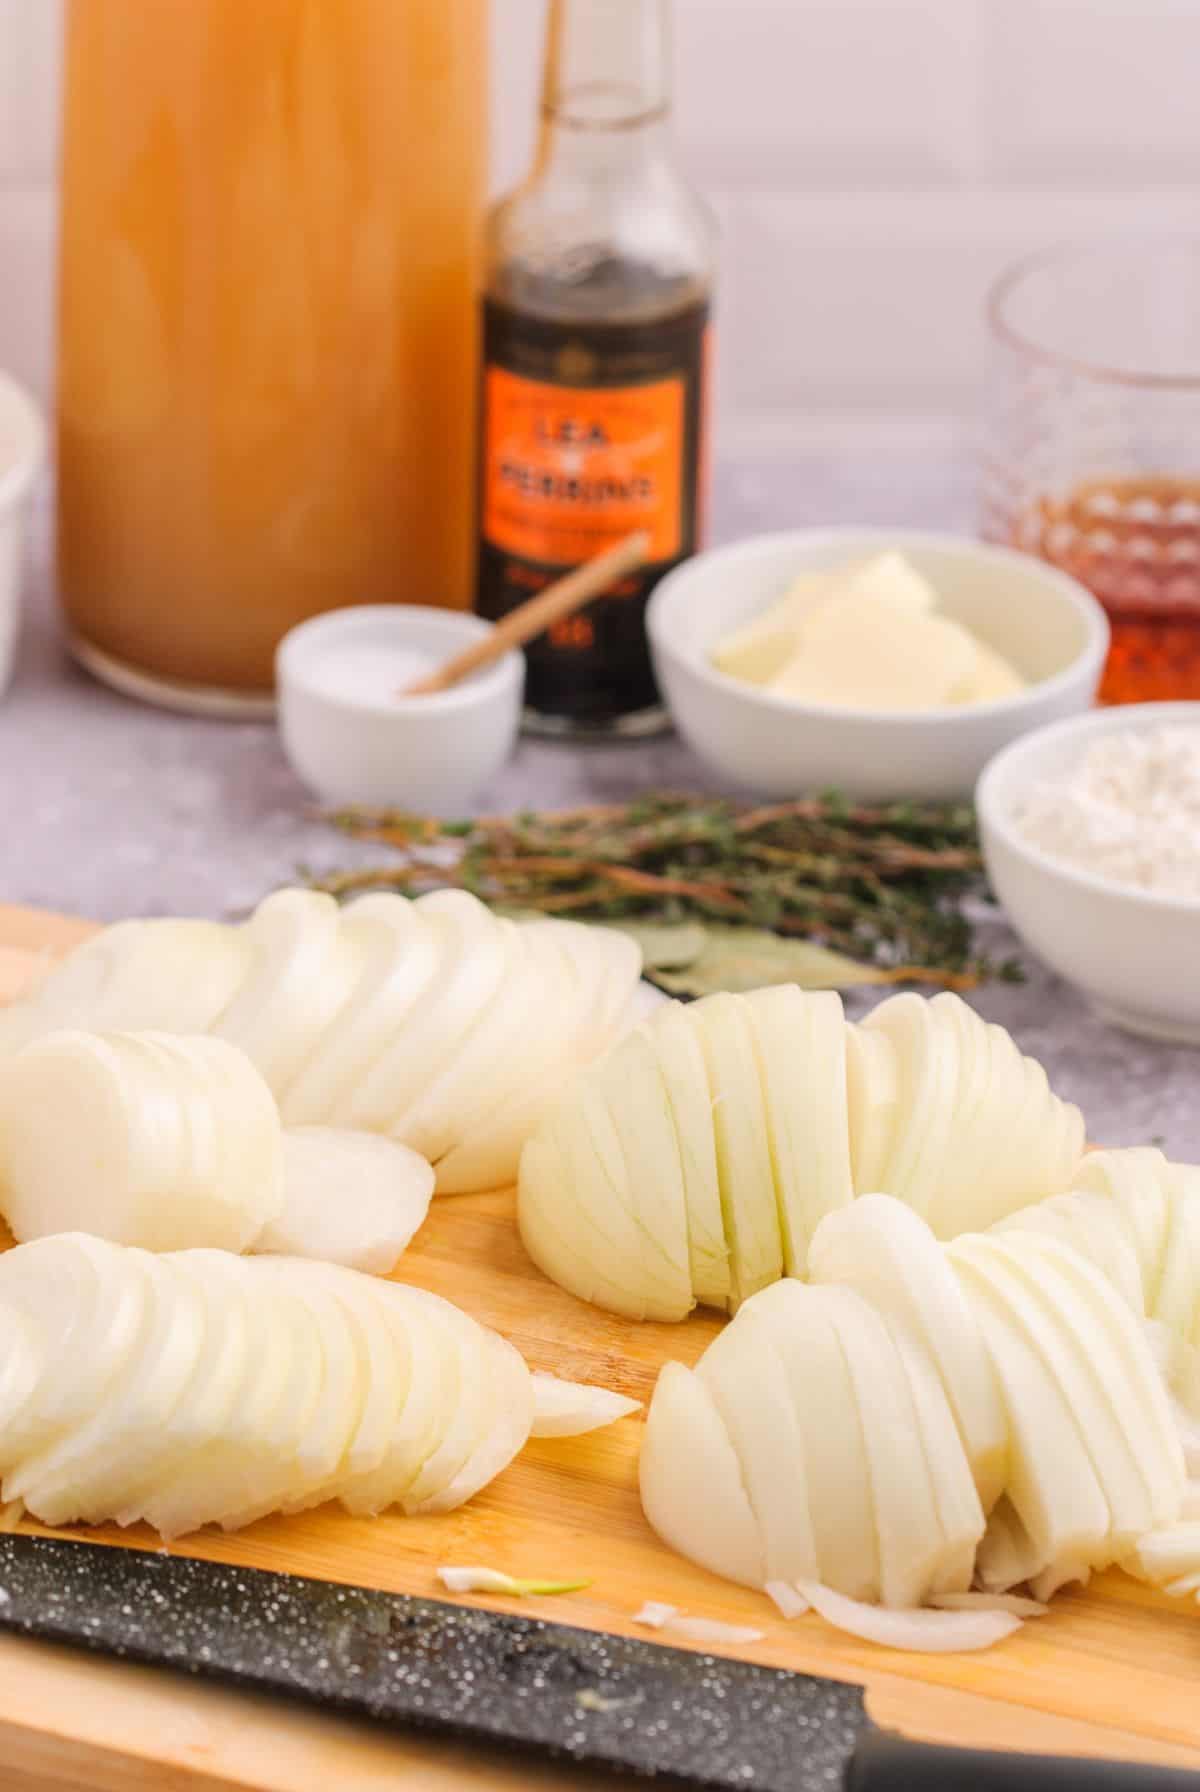 How to Make Crockpot French Onion Soup